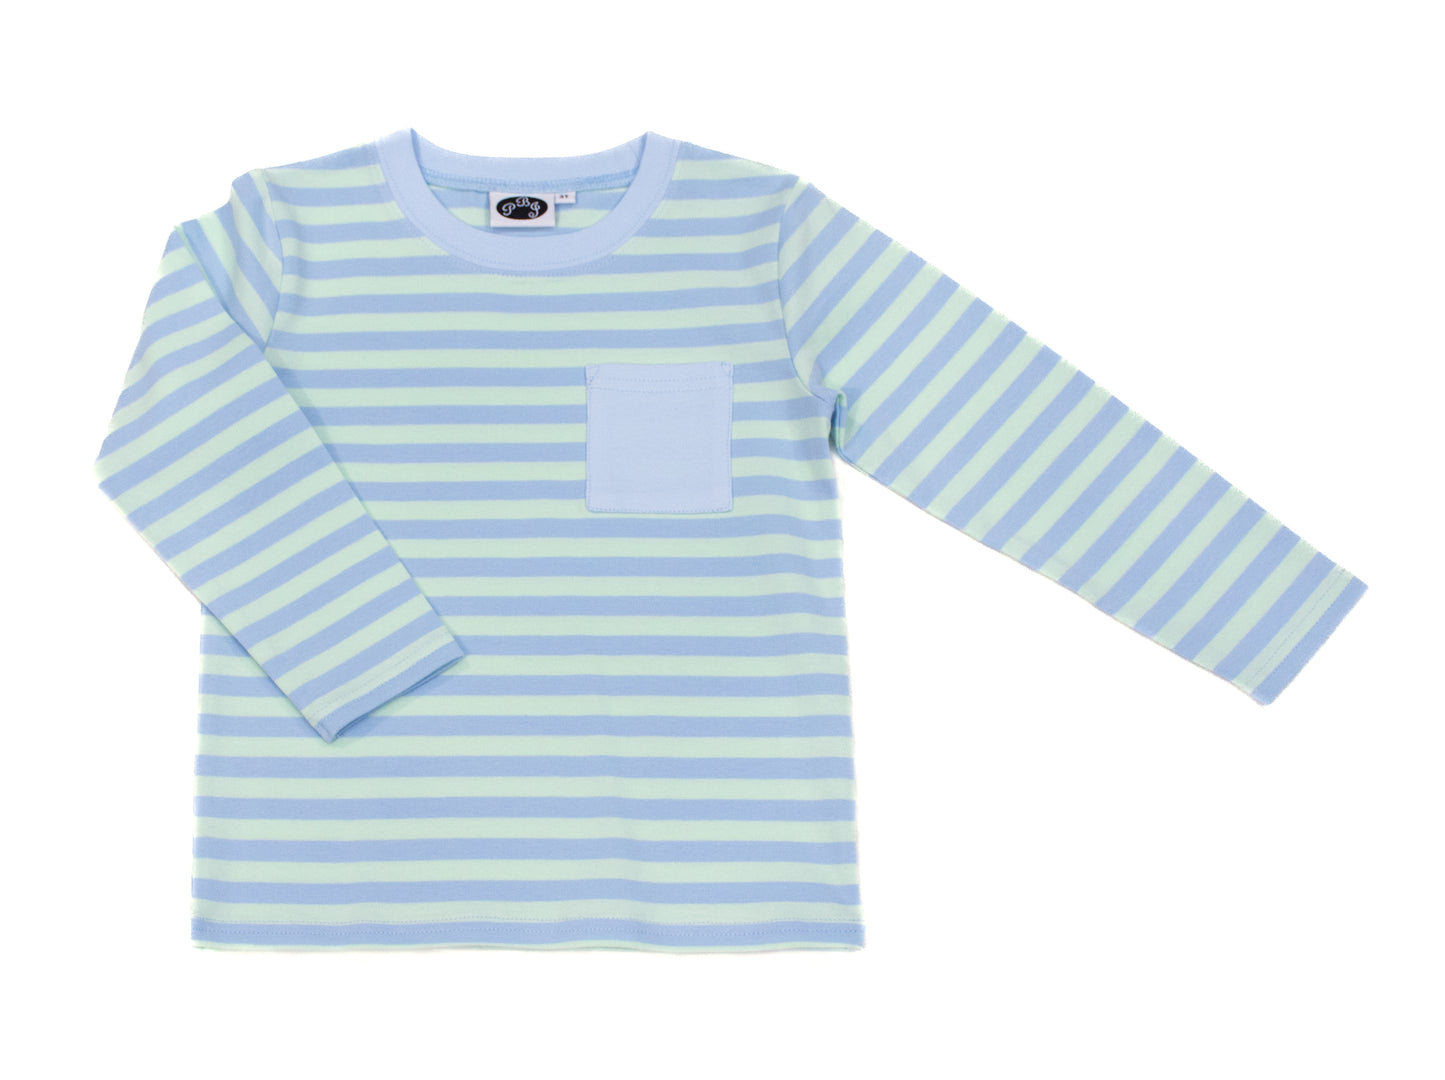 LS Seaside Stripe Pocket shirt - PREORDER*